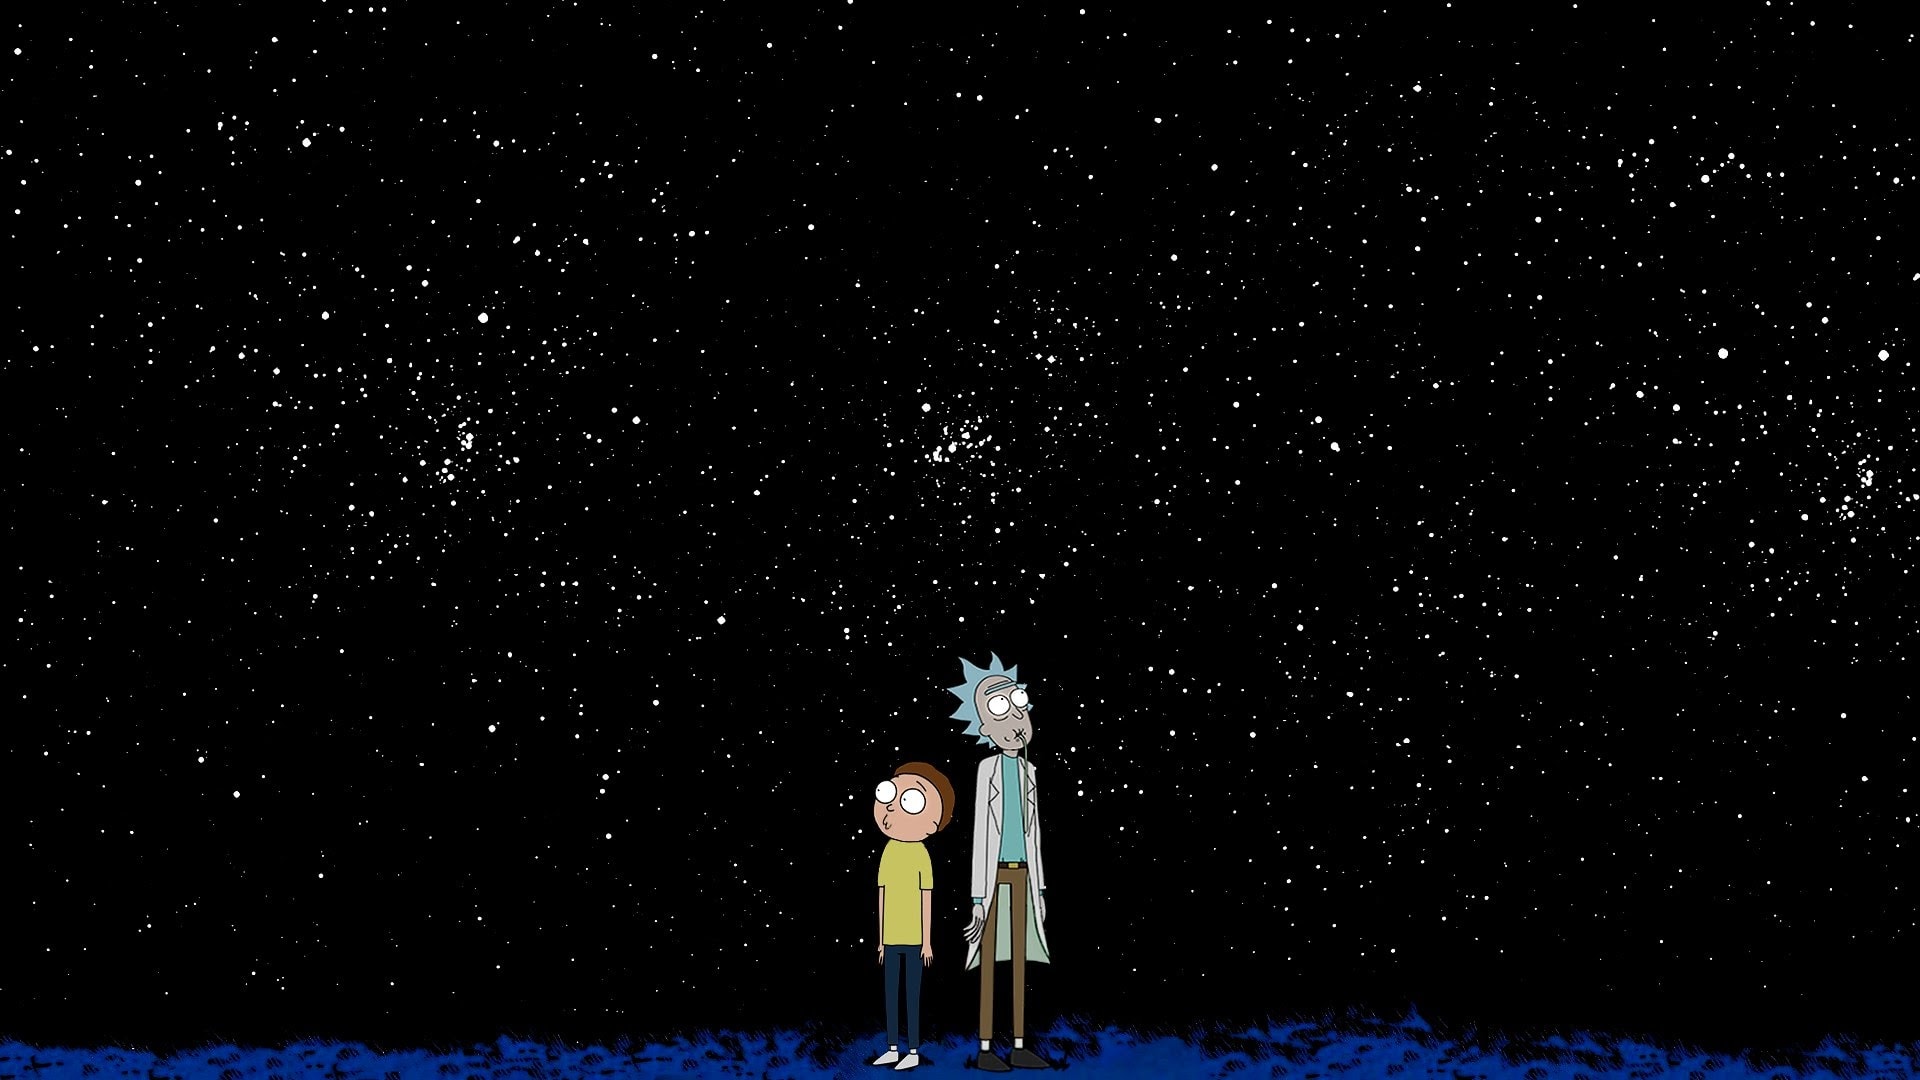 Rick And Morty Minimal Wallpapers